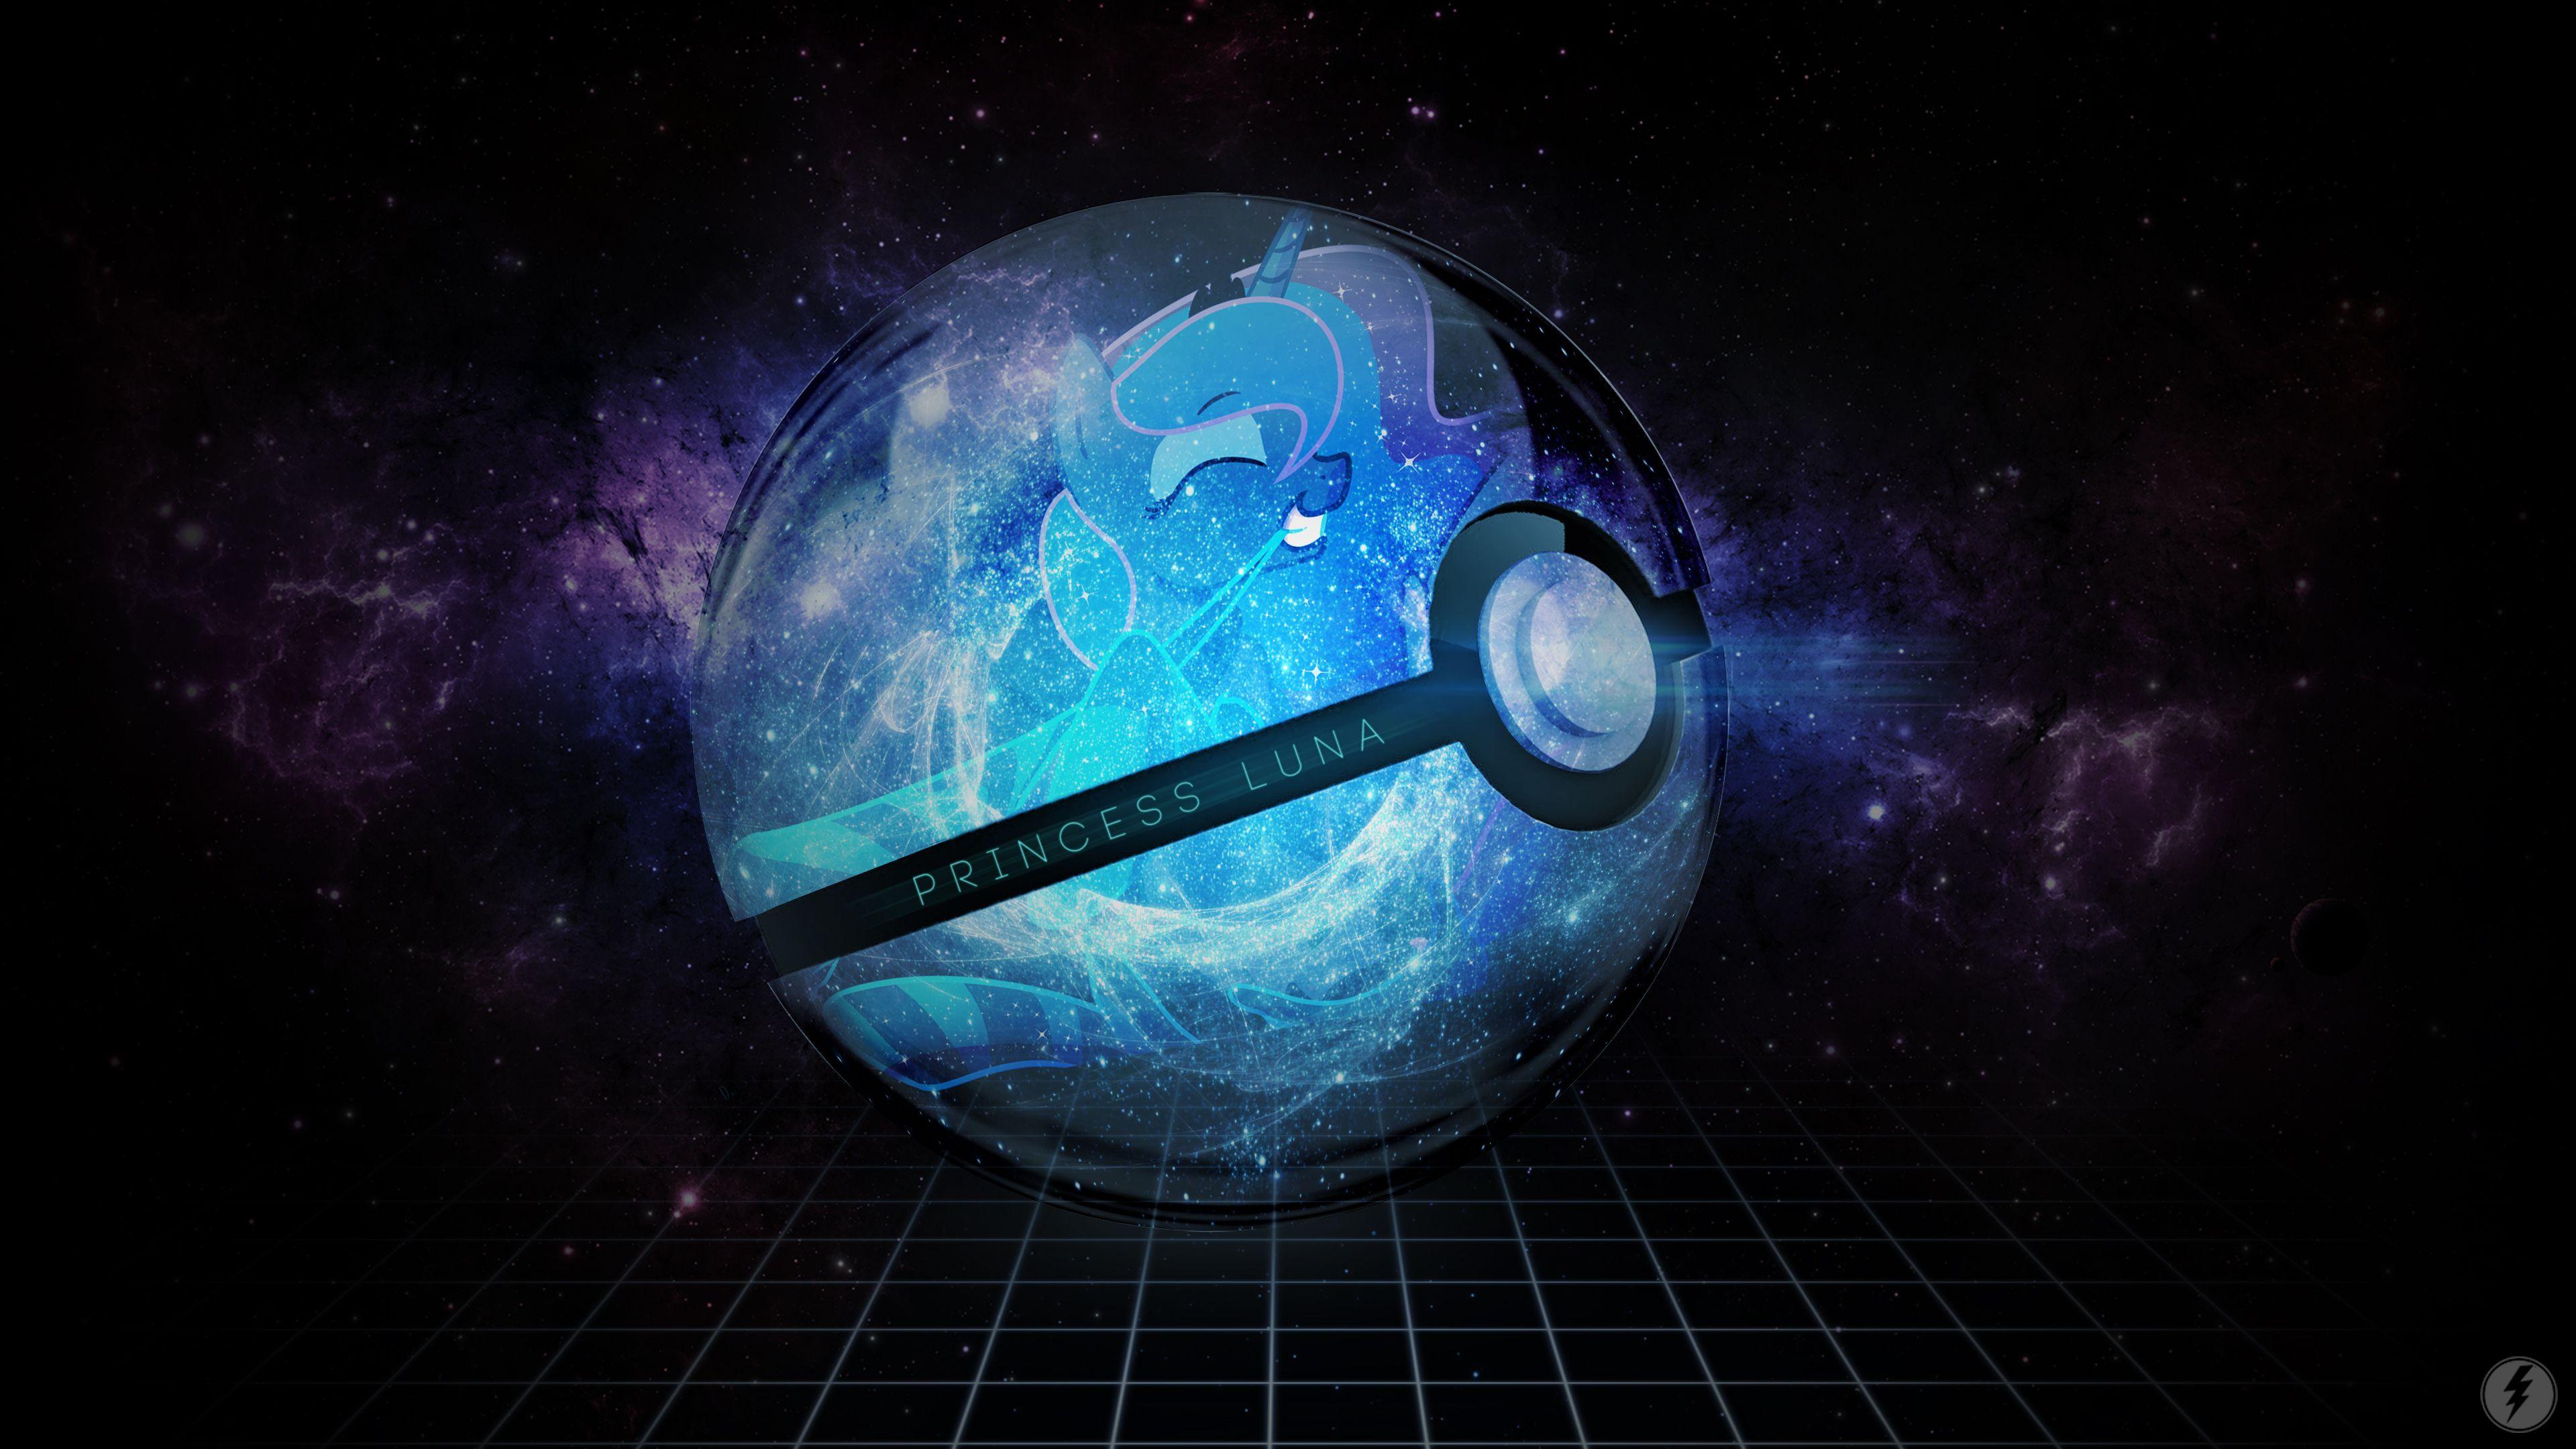 blue pokeball background